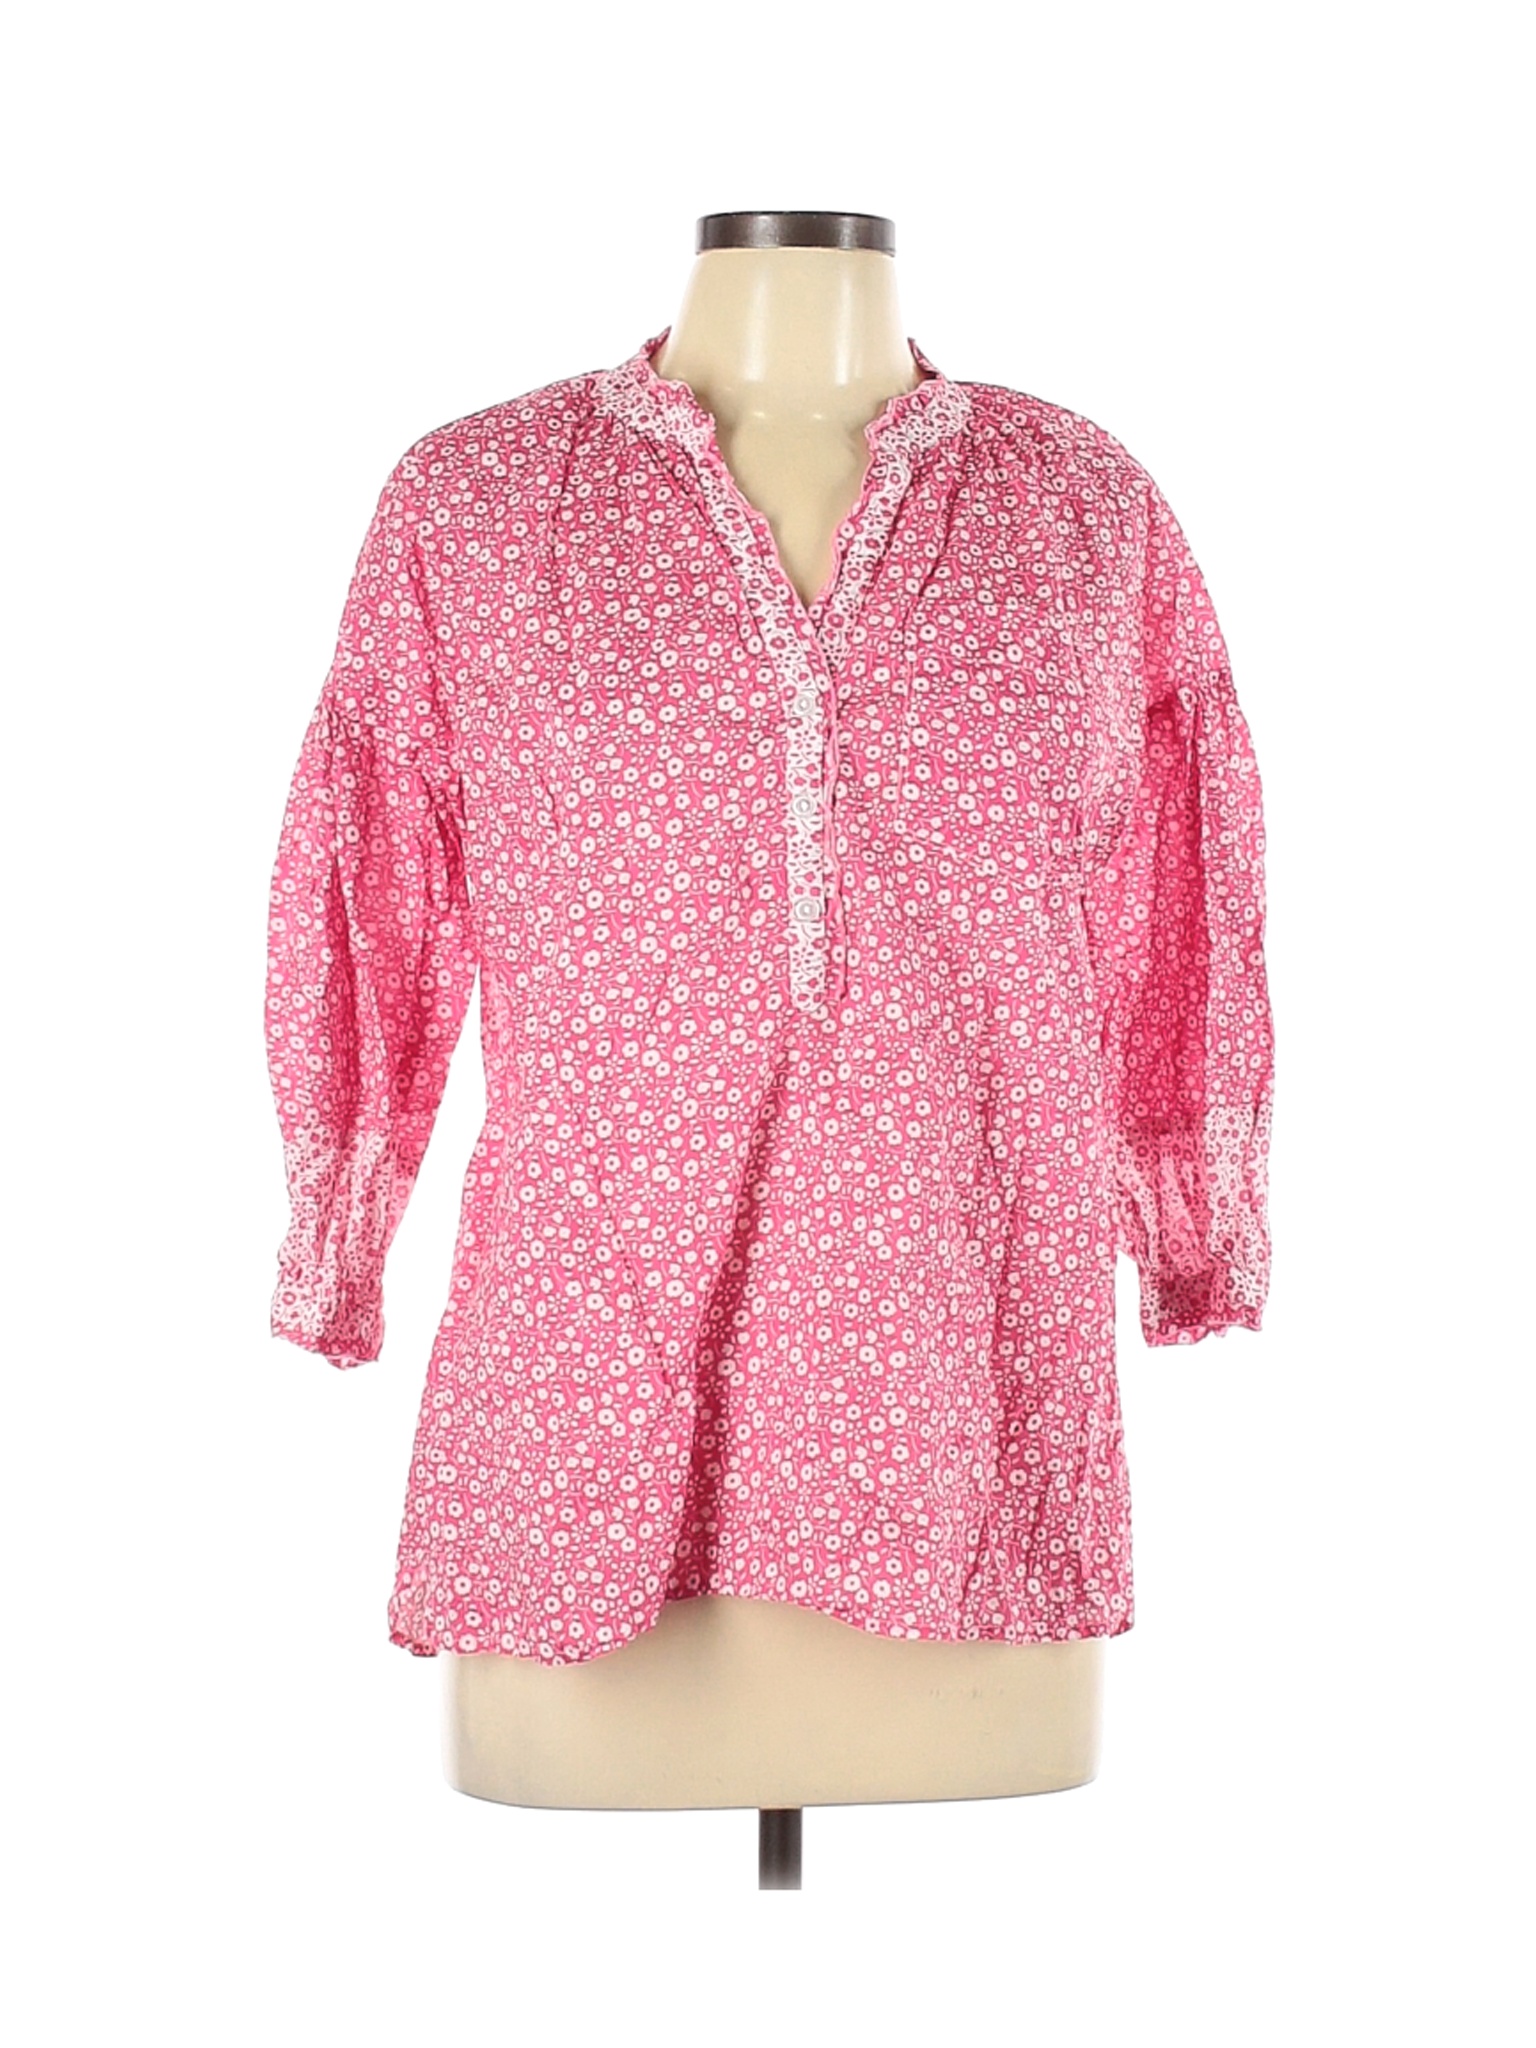 Tuckernuck Women Pink 3/4 Sleeve Blouse L | eBay